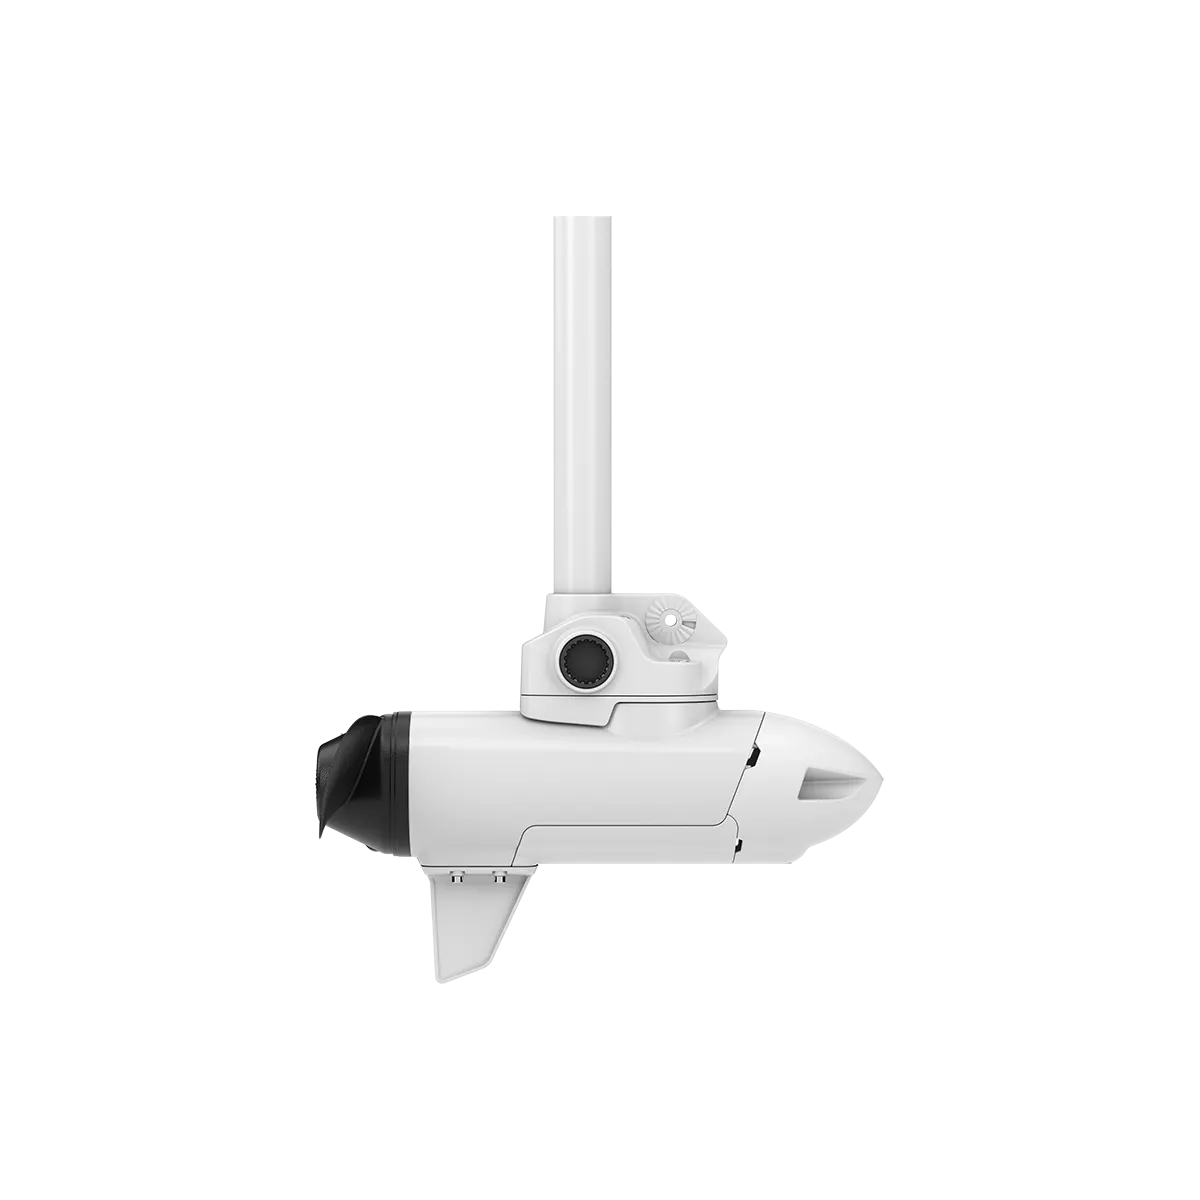  Garmin Force Kraken Trolling Motor - 63 - White [010-02574-00]  : Sports & Outdoors